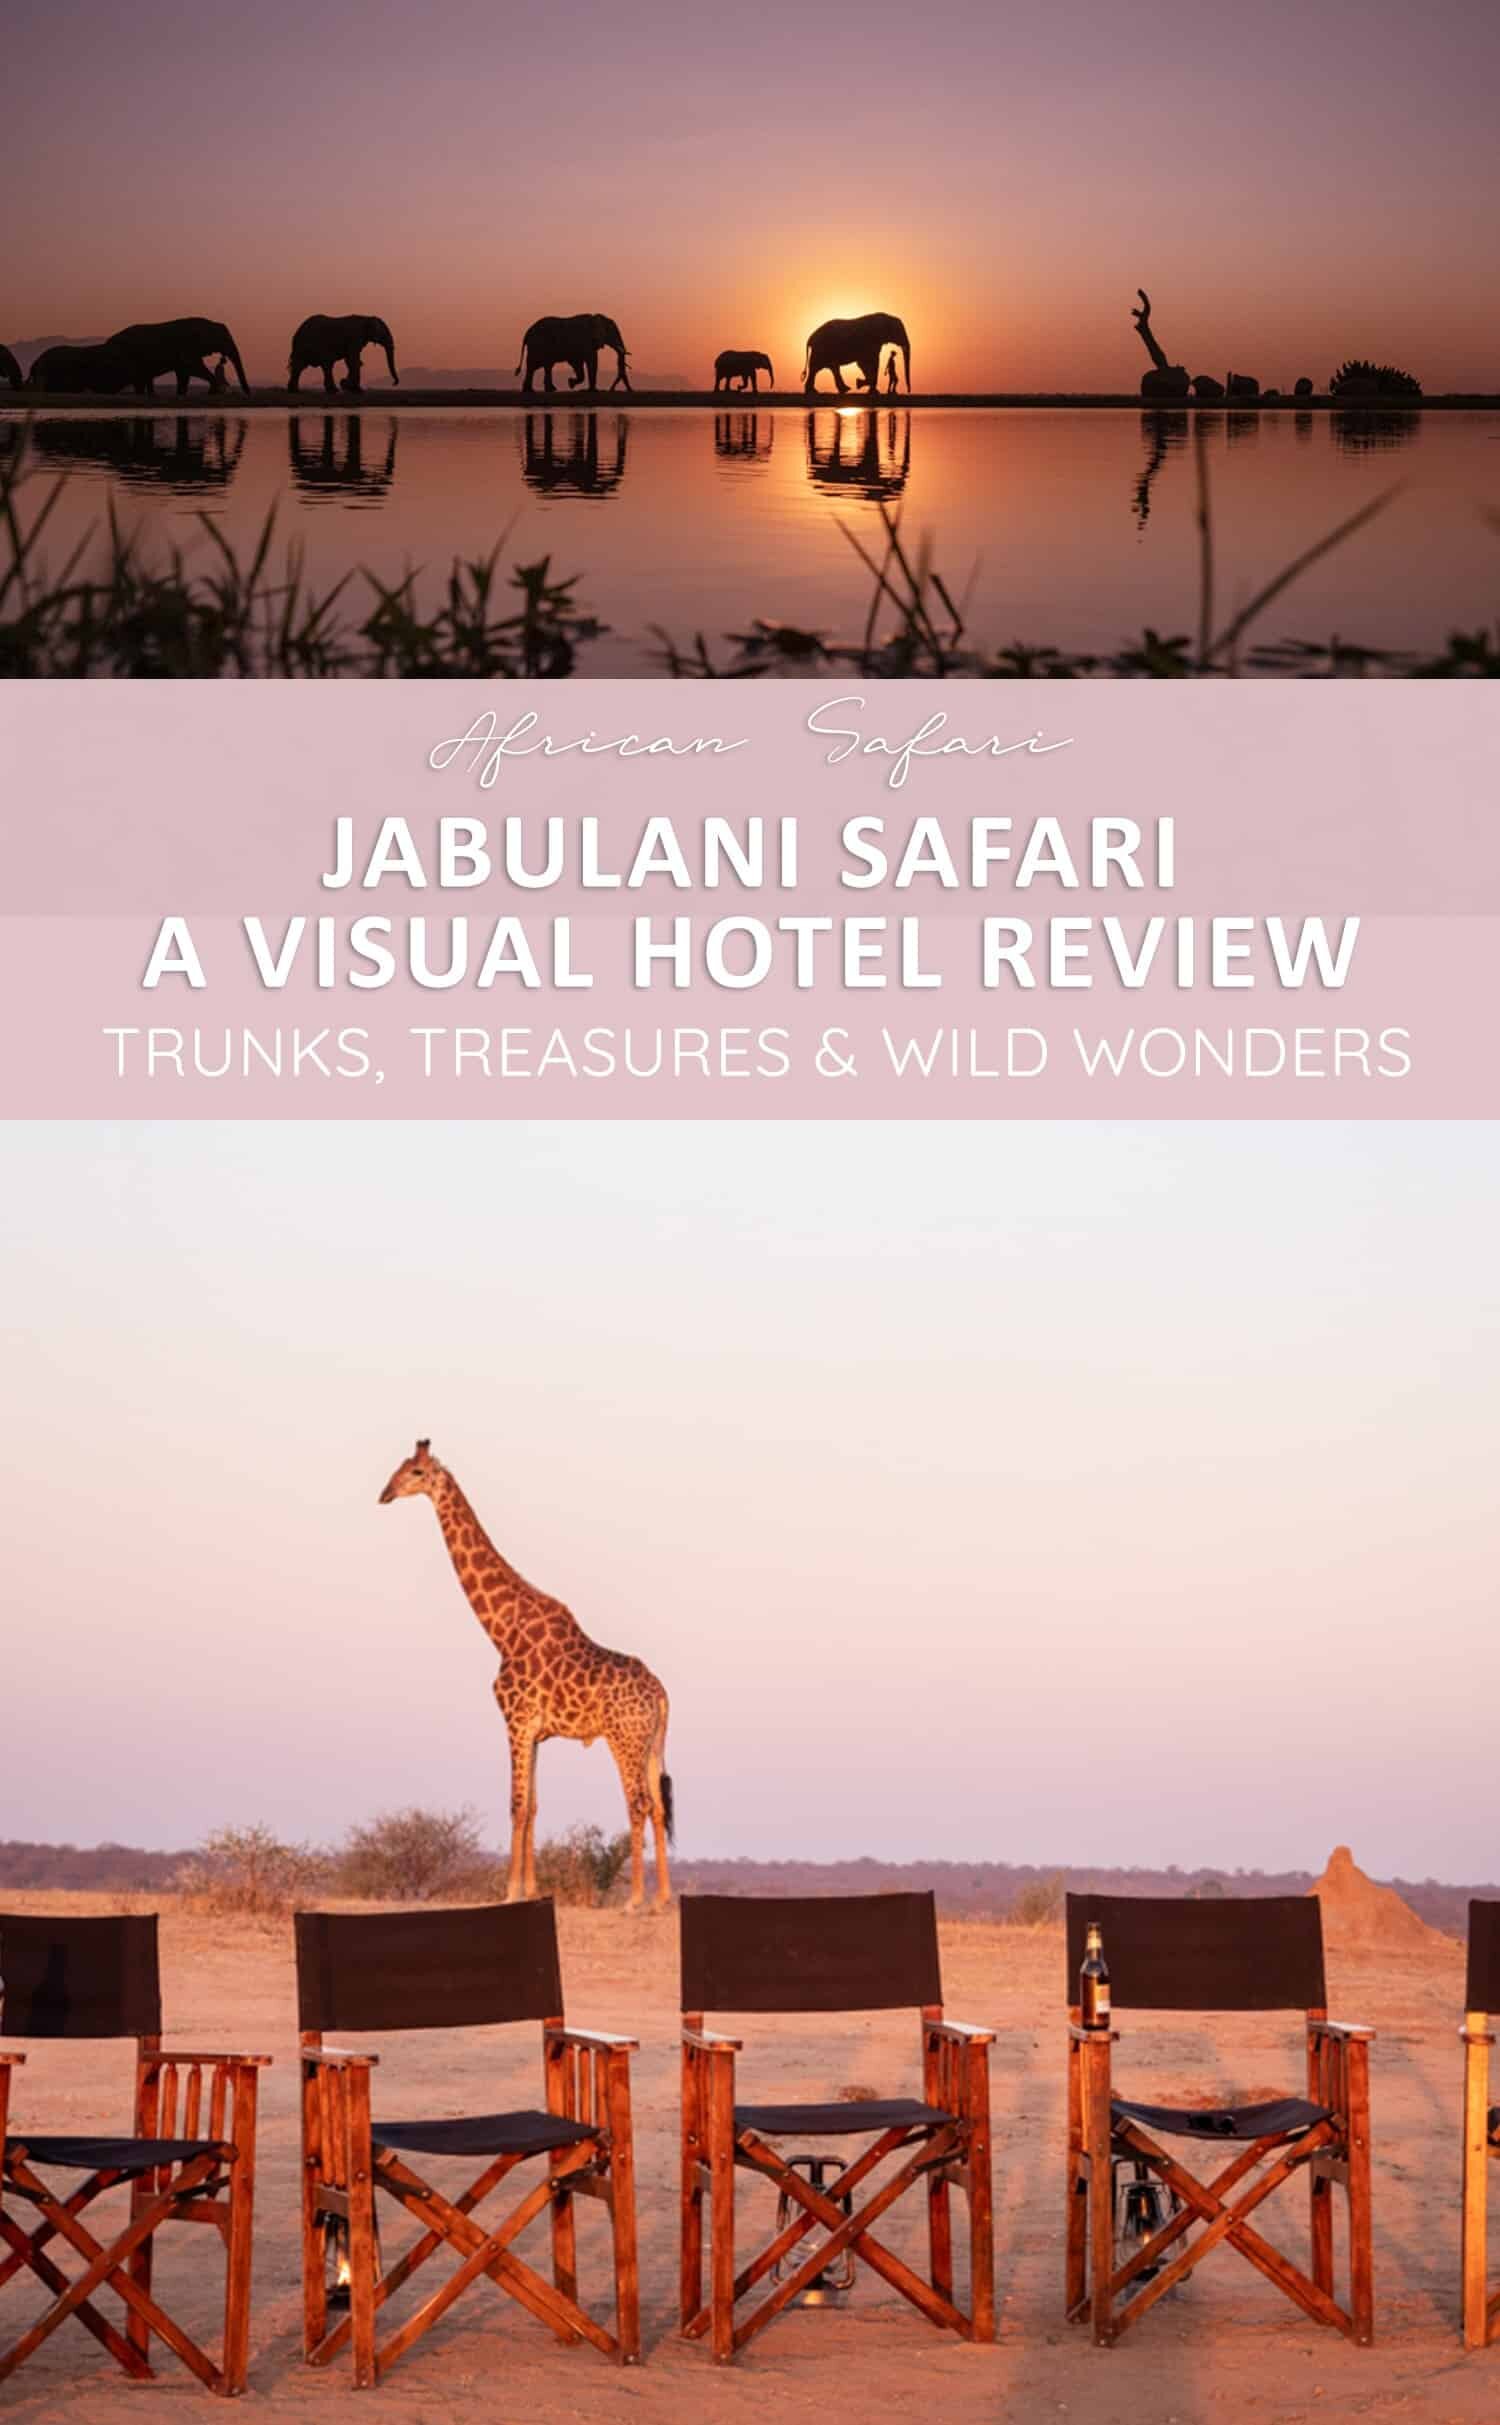 Trunks, Treasures and the Jabulani Safari Experience